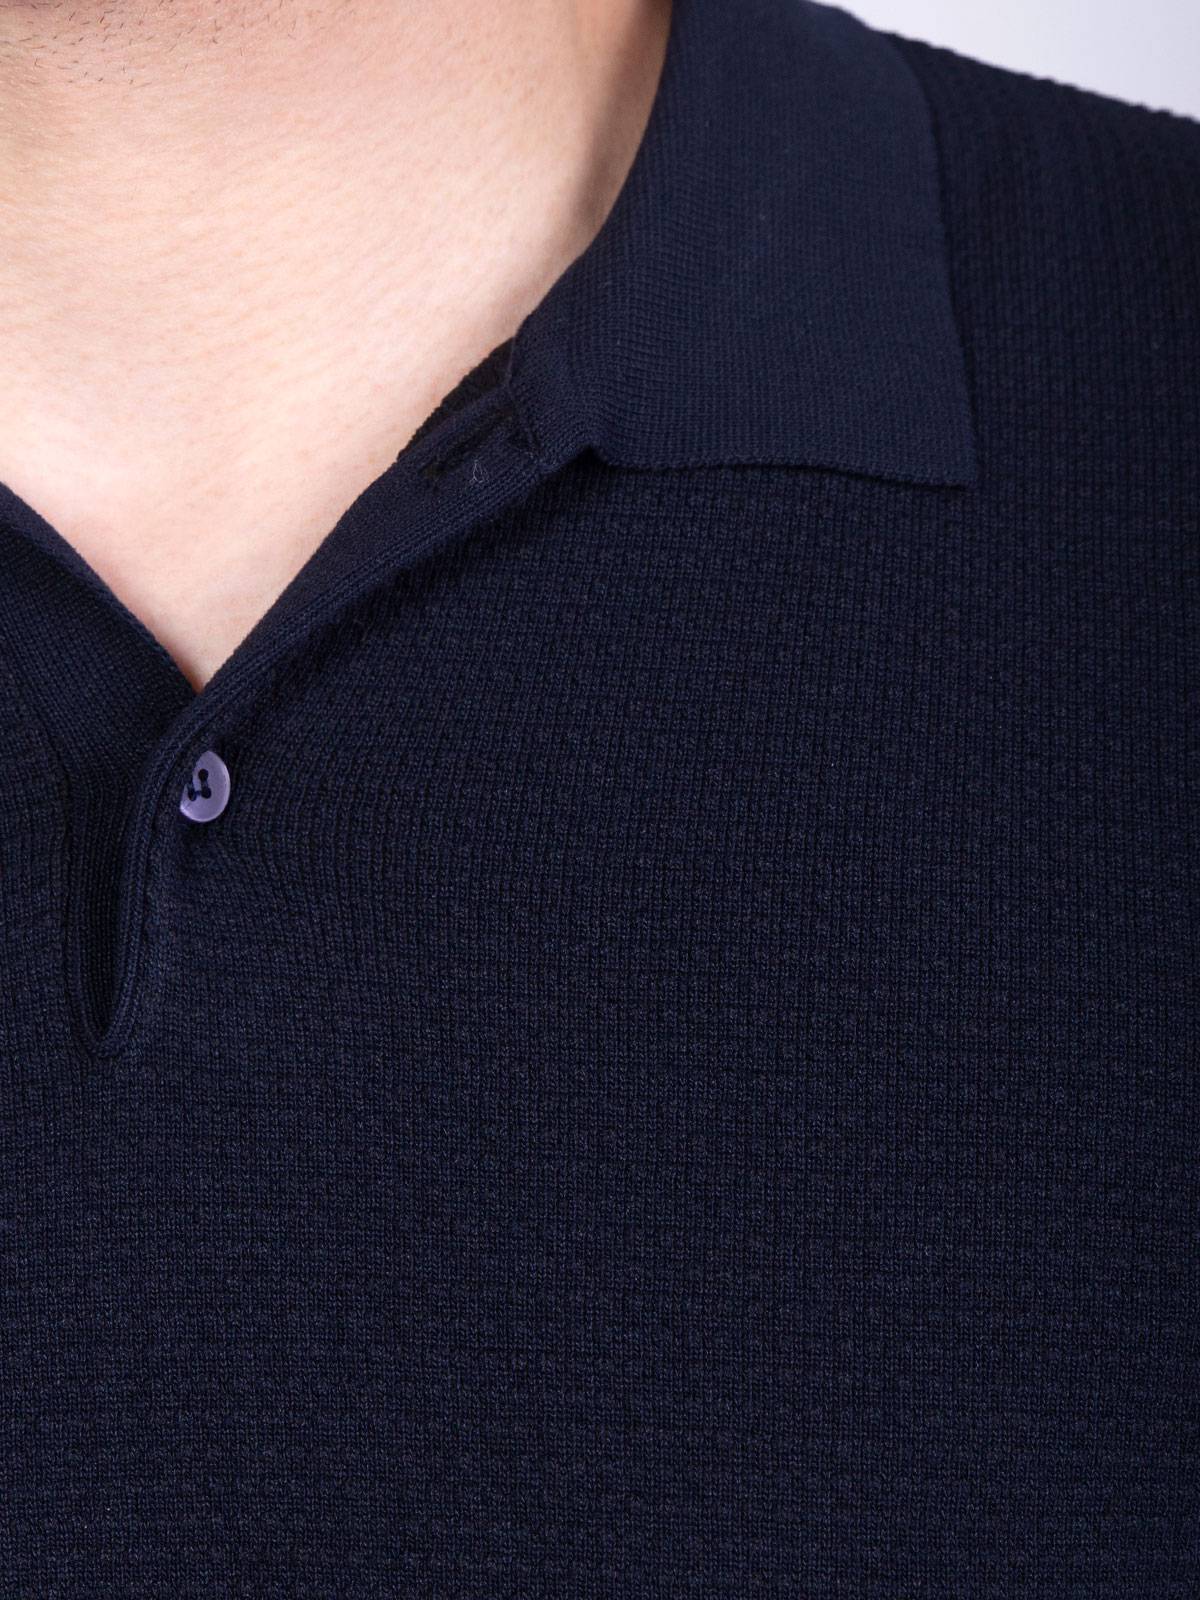 Knitted tshirt in dark blue - 94404 € 32.06 img4